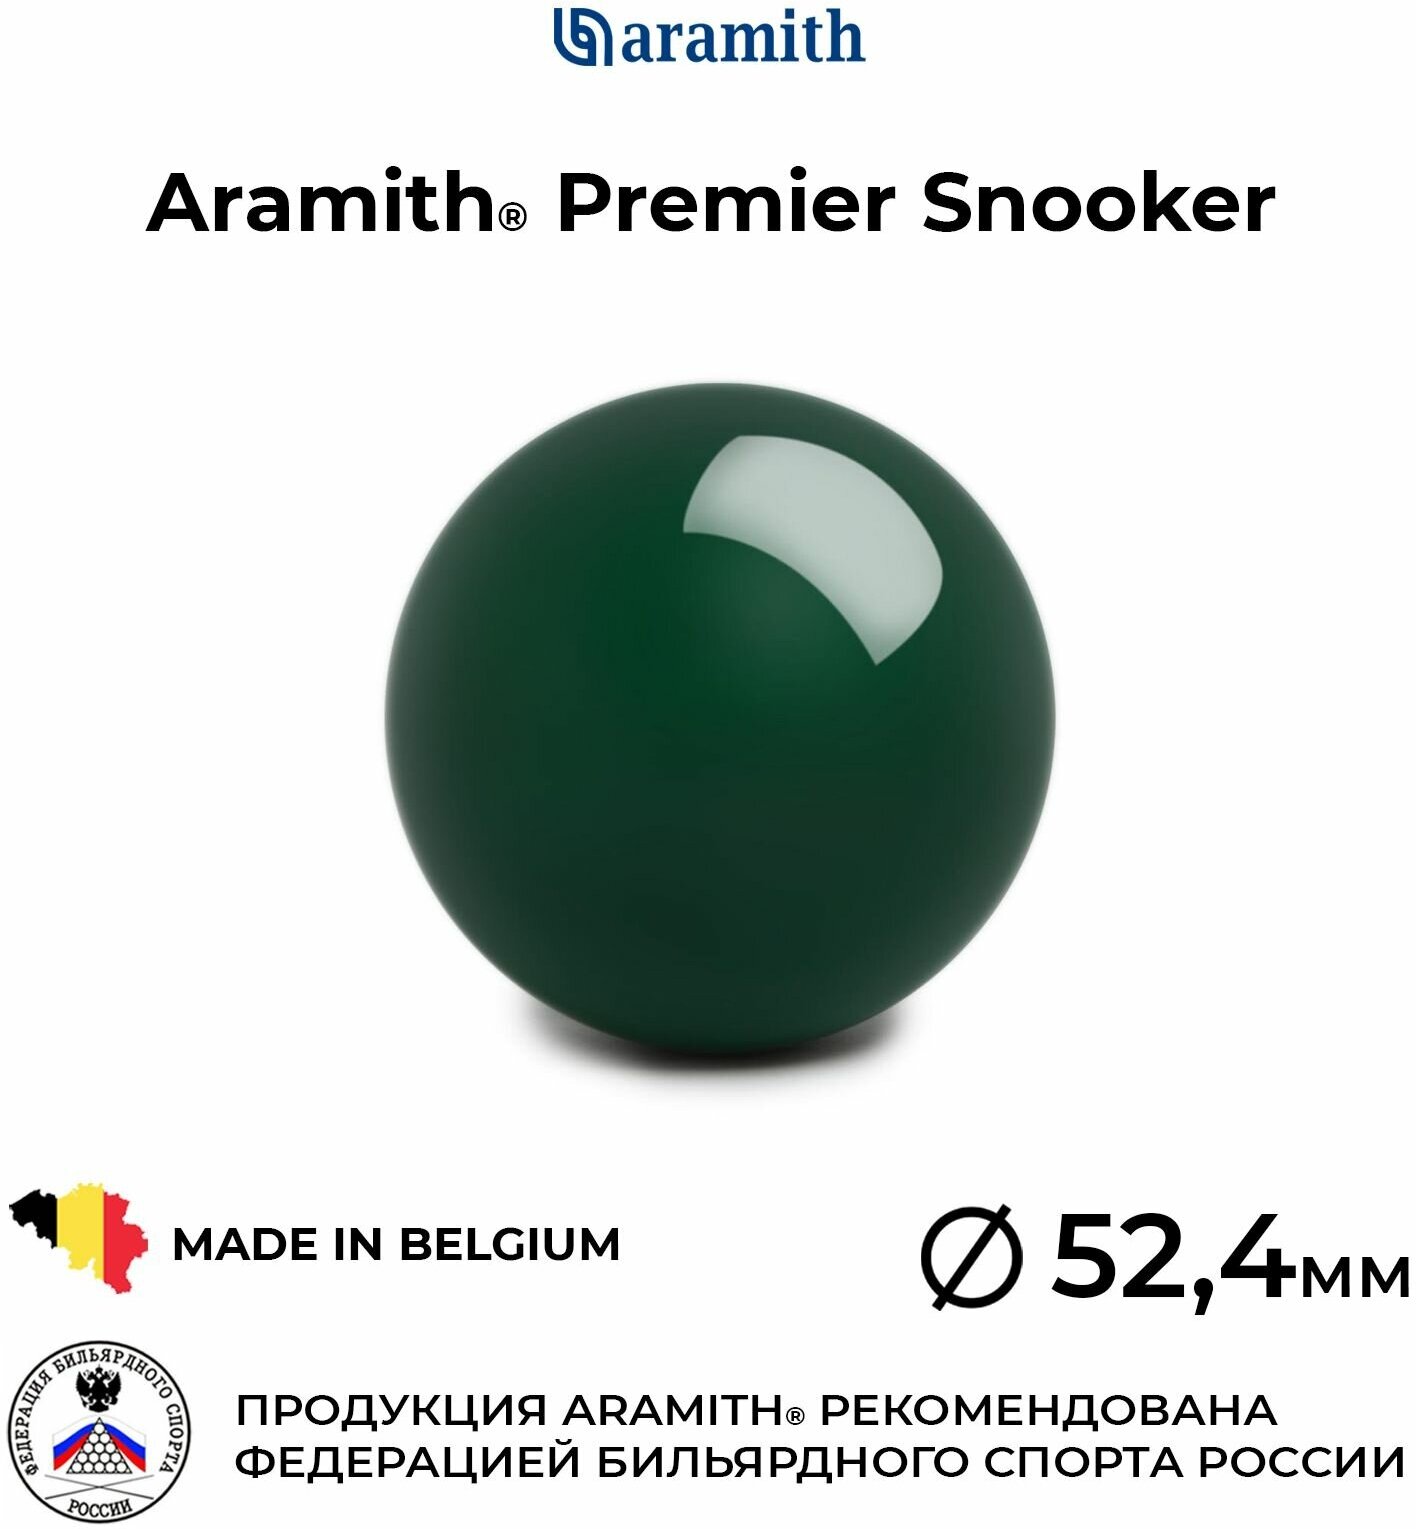 Бильярдный шар 52,4 мм Арамит Премьер Снукер / Aramith Premier Snooker 52,4 мм зеленый 1 шт.